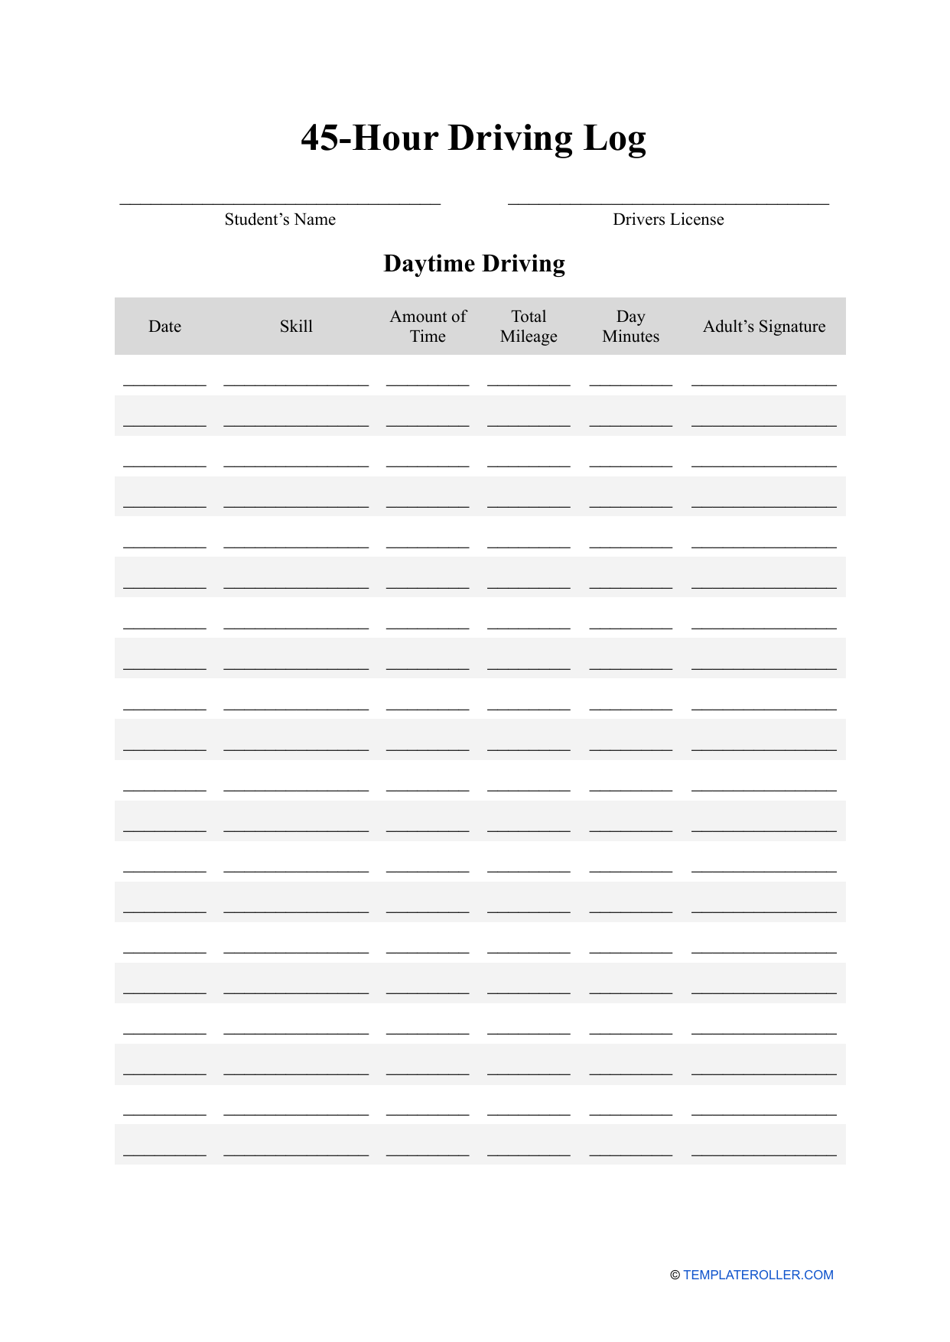 45 Hour Driving Log Sheet Template Download Printable PDF Templateroller